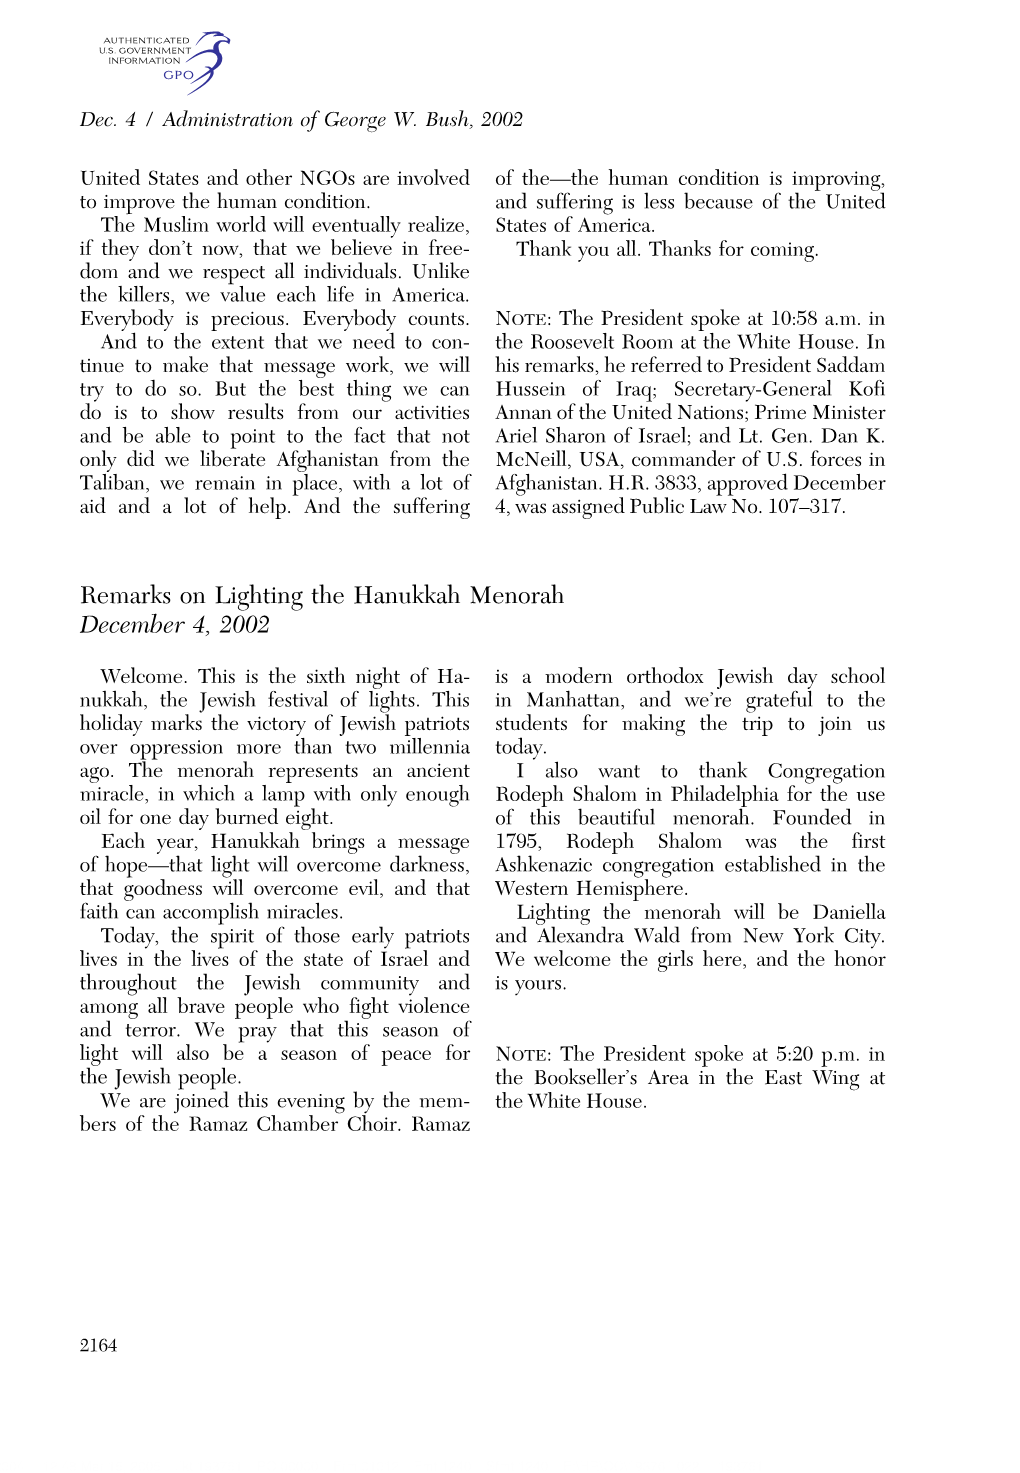 Remarks on Lighting the Hanukkah Menorah December 4, 2002